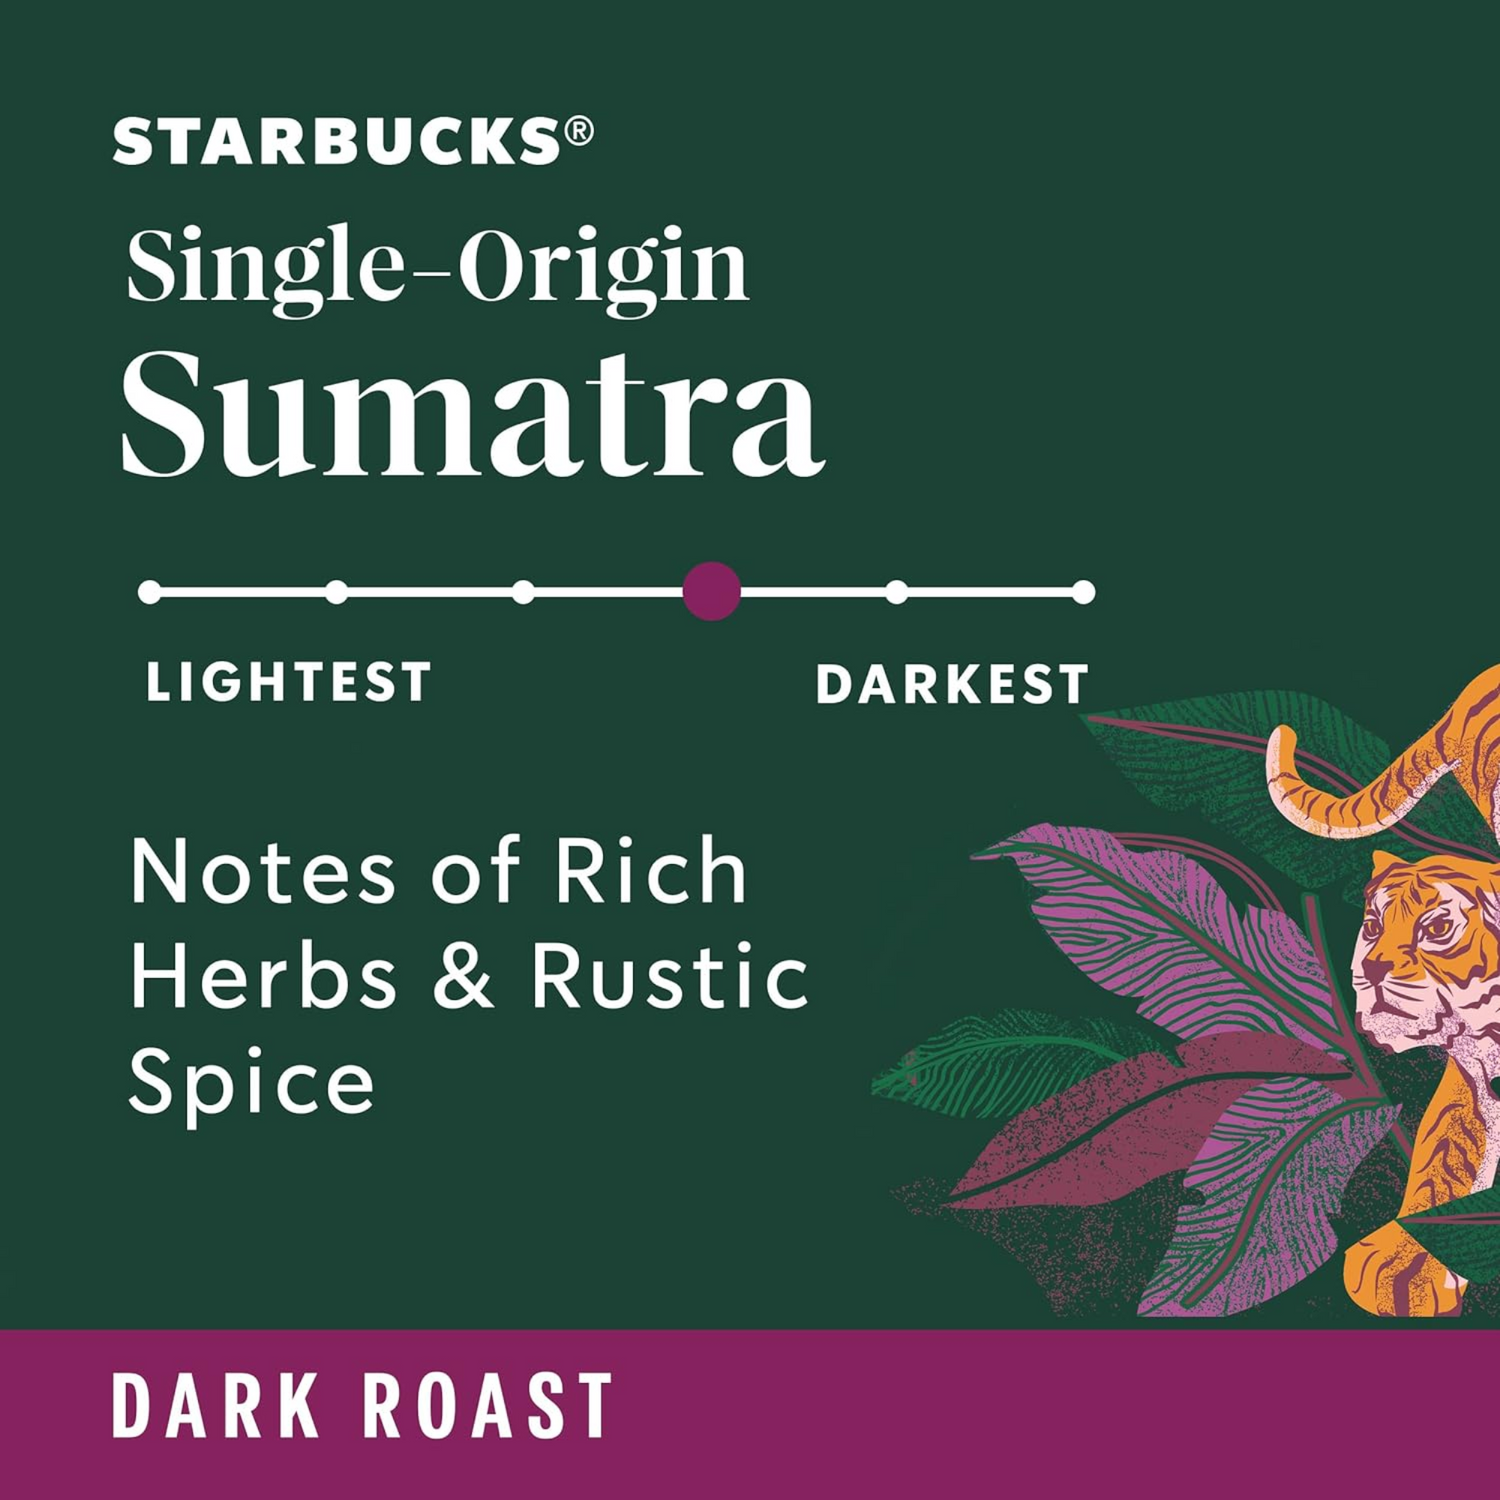 Starbucks K-Cup Coffee Pod Dark Roast Coffee—Sumatra 100% Arabica 1 box (32 pods)